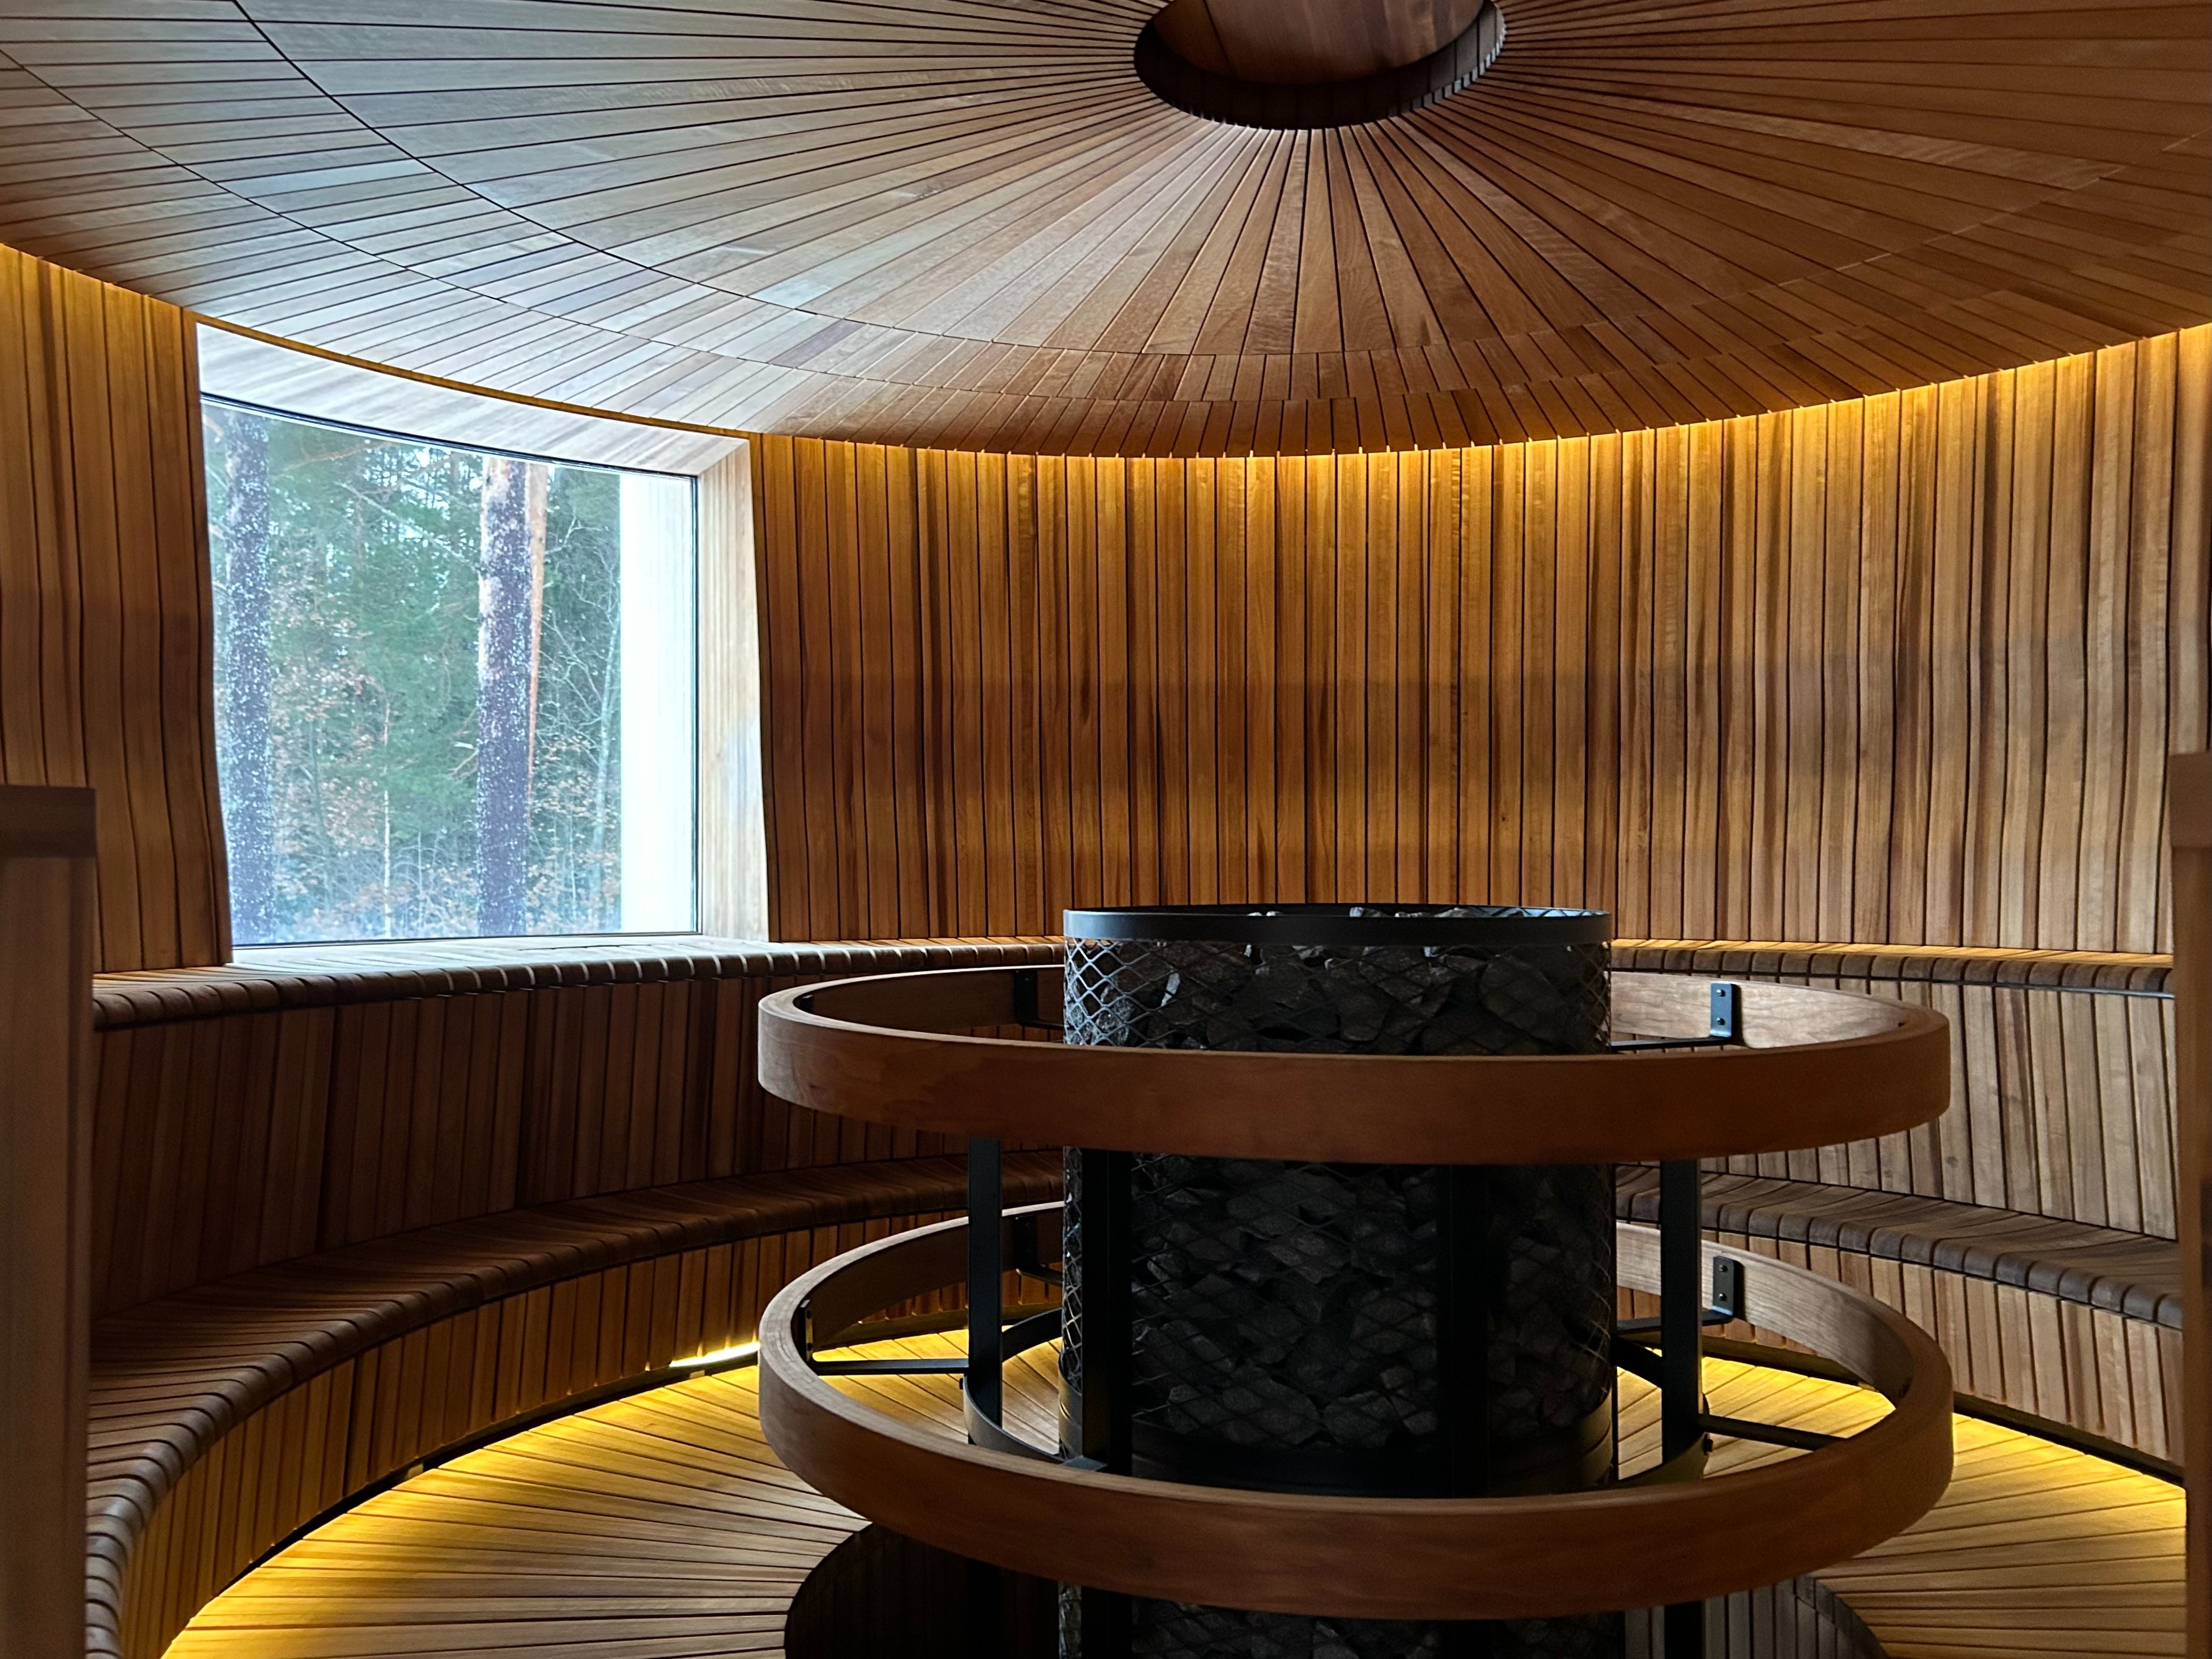 Sauna is a sociable affair in Finland – the ‘art sauna’ at Serlachius Museum Gösta seats up to 20